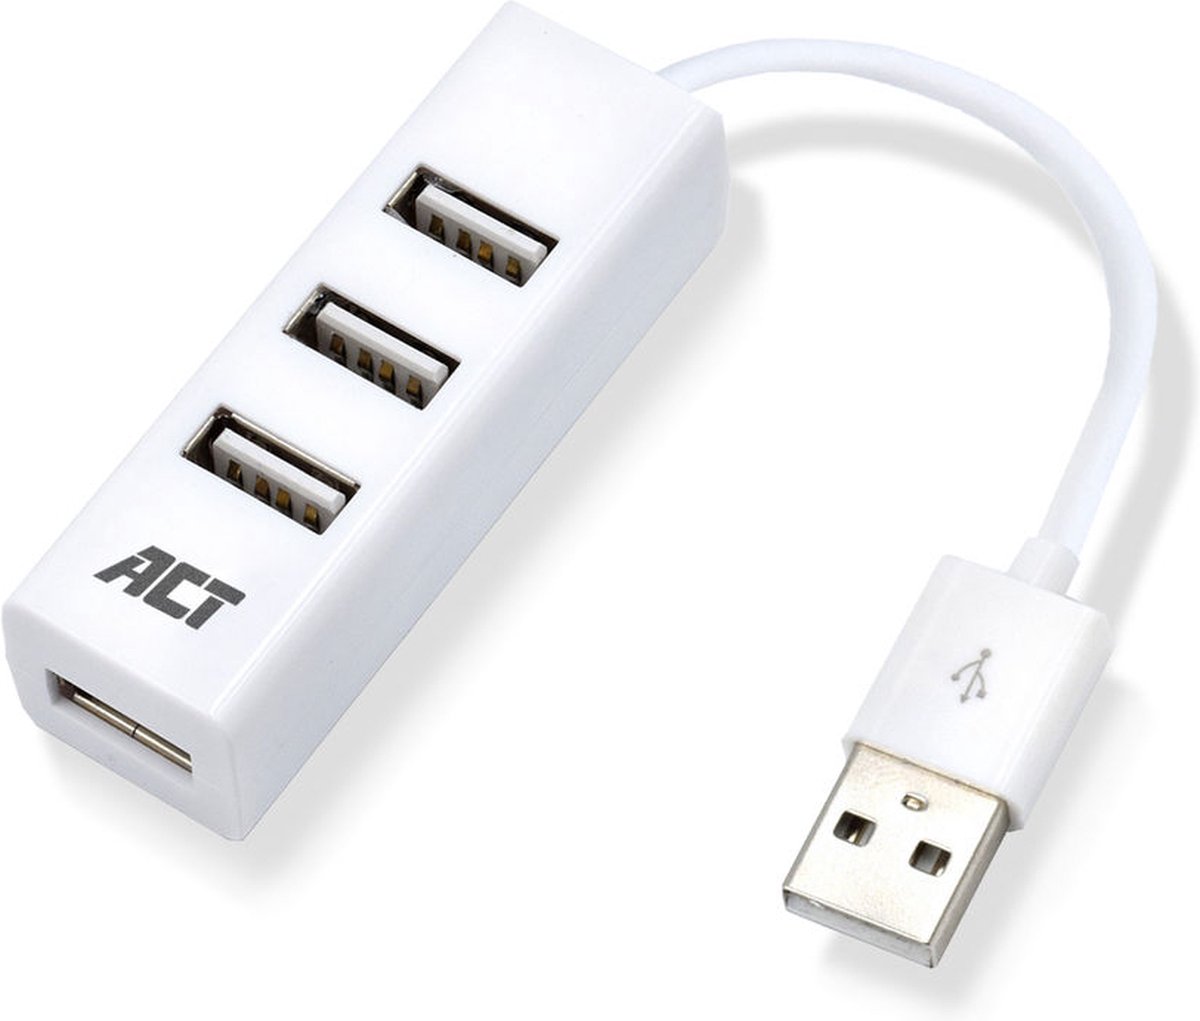 Togadget® - Adaptateur USB Hub 3.0 Rotatif - Répartiteur USB - Ports USB  multiples - Noir